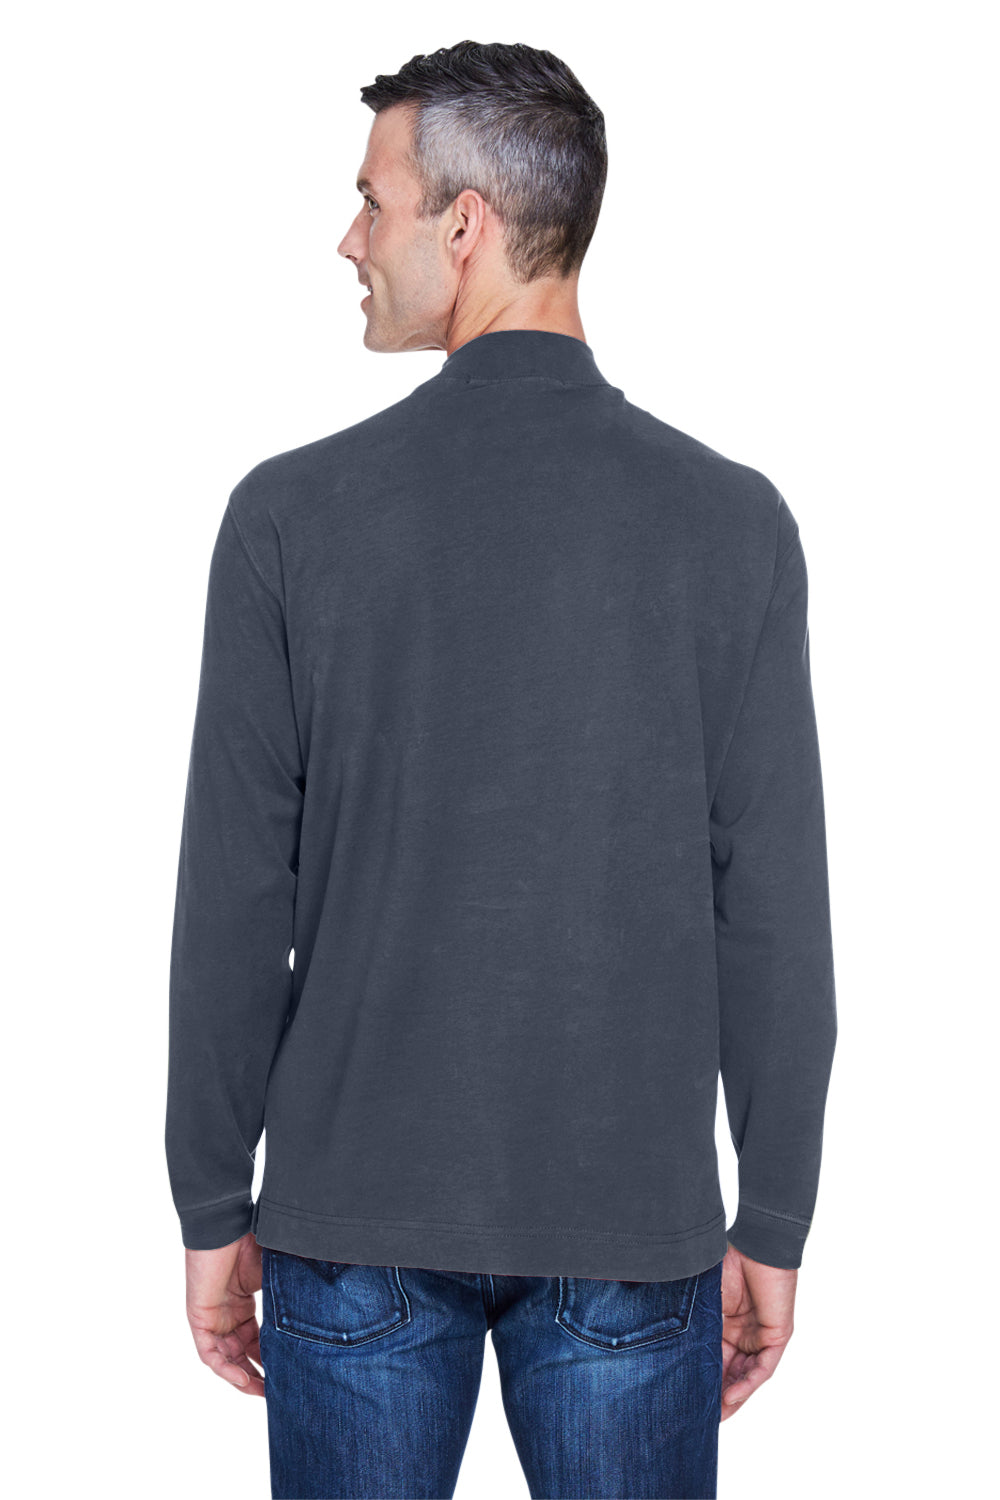 Devon & Jones D420 Mens Sueded Jersey Long Sleeve Mock Neck T-Shirt Navy Blue Back